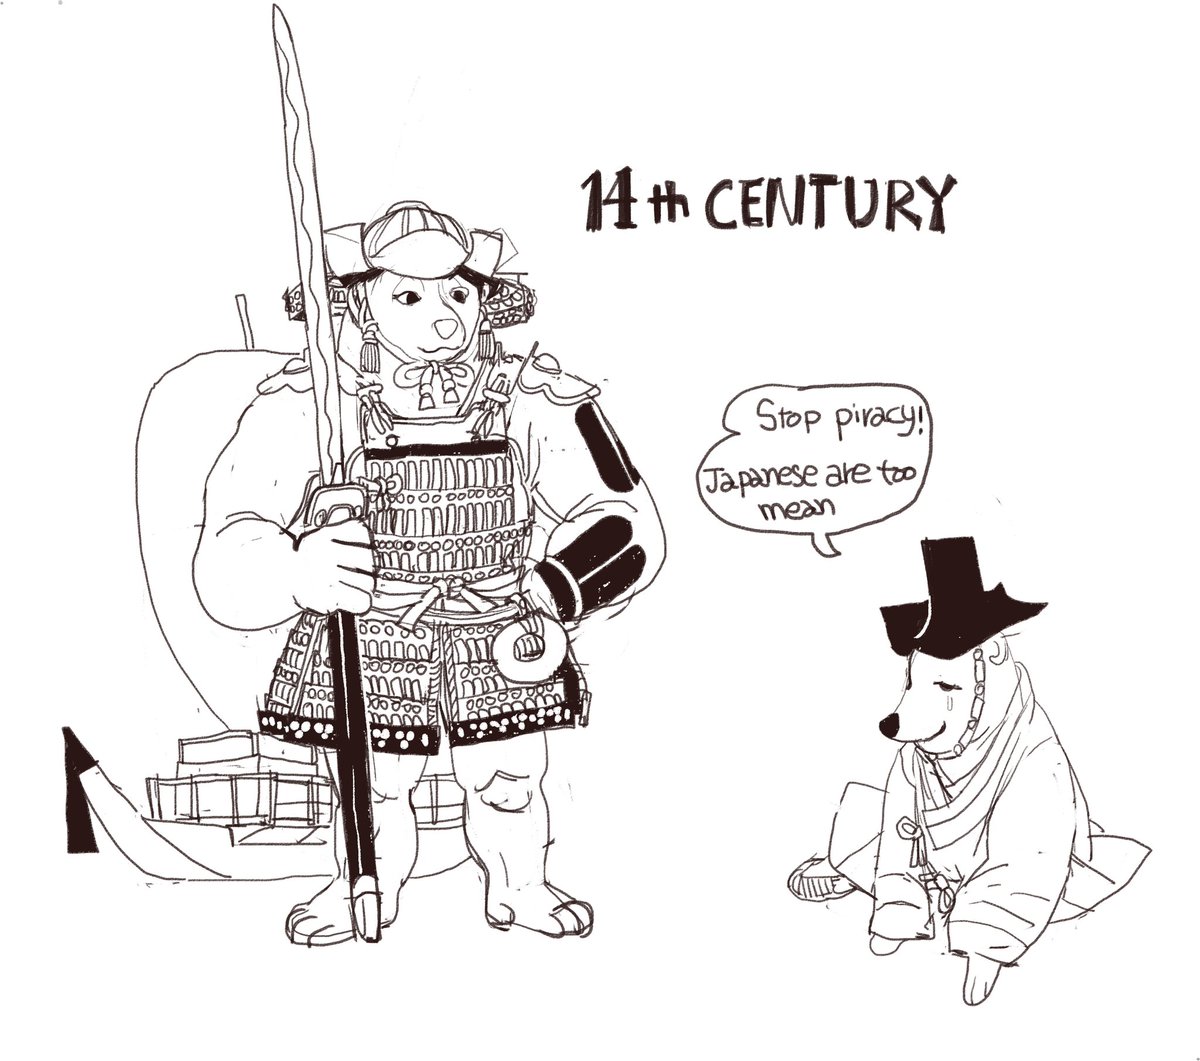 9th century korea and japan vs 14 th century  japan vs korea 